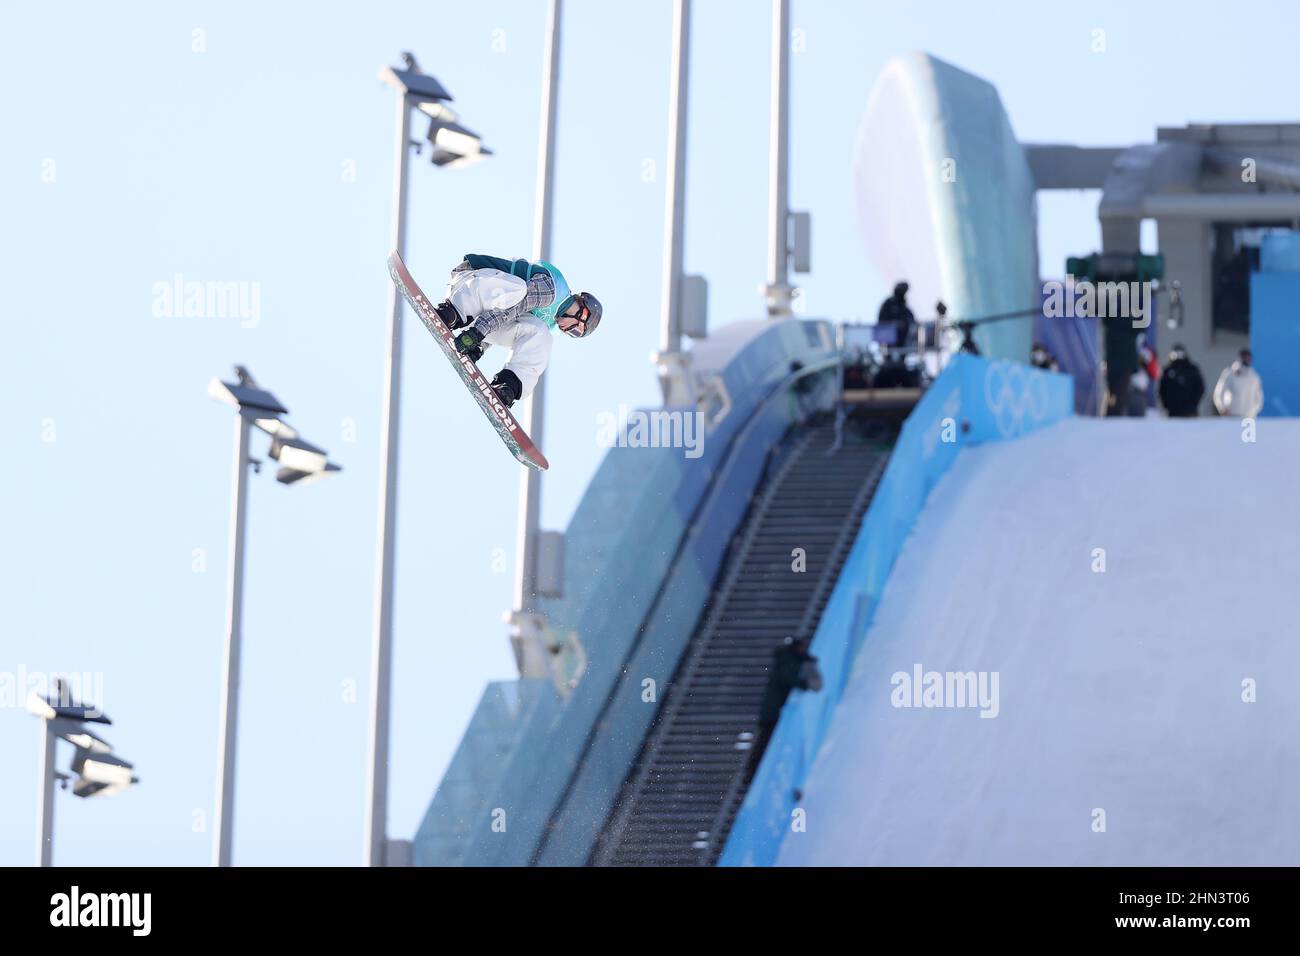 Big air snowboard hi-res stock photography and images